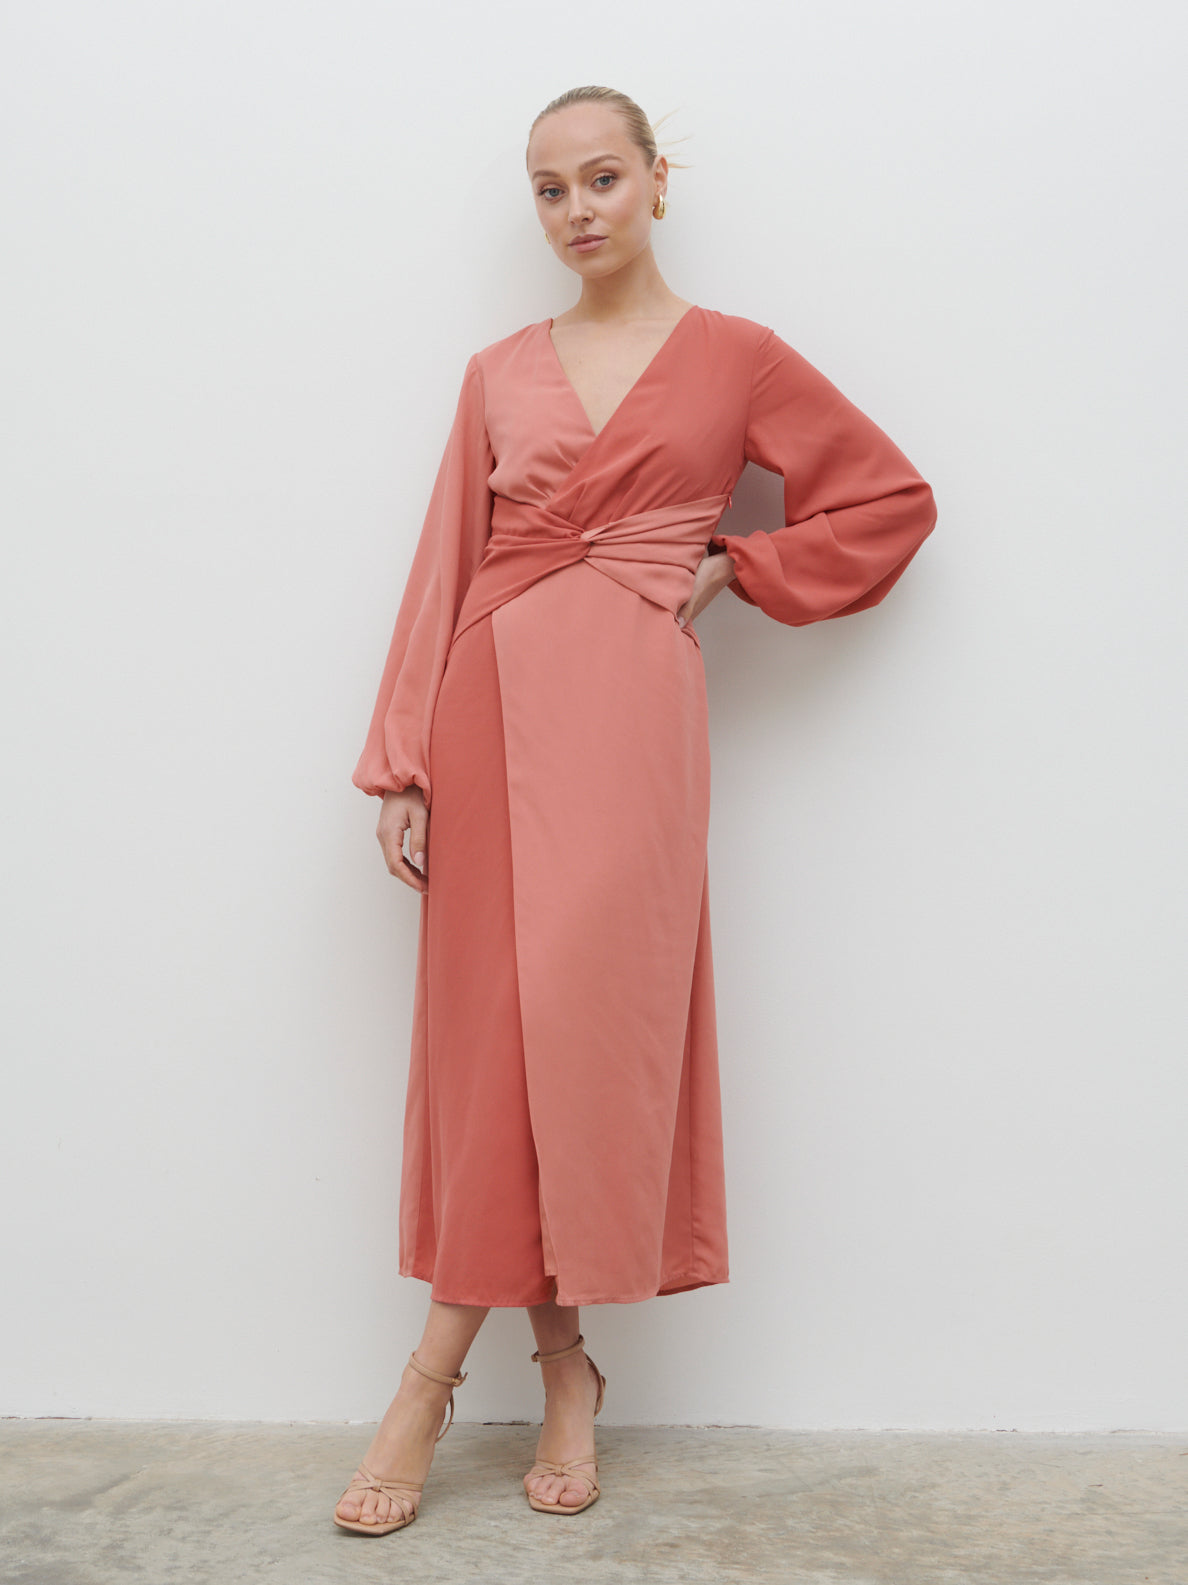 Friena Knot Contrast Midaxi Dress - Terracotta and Dusky Rose